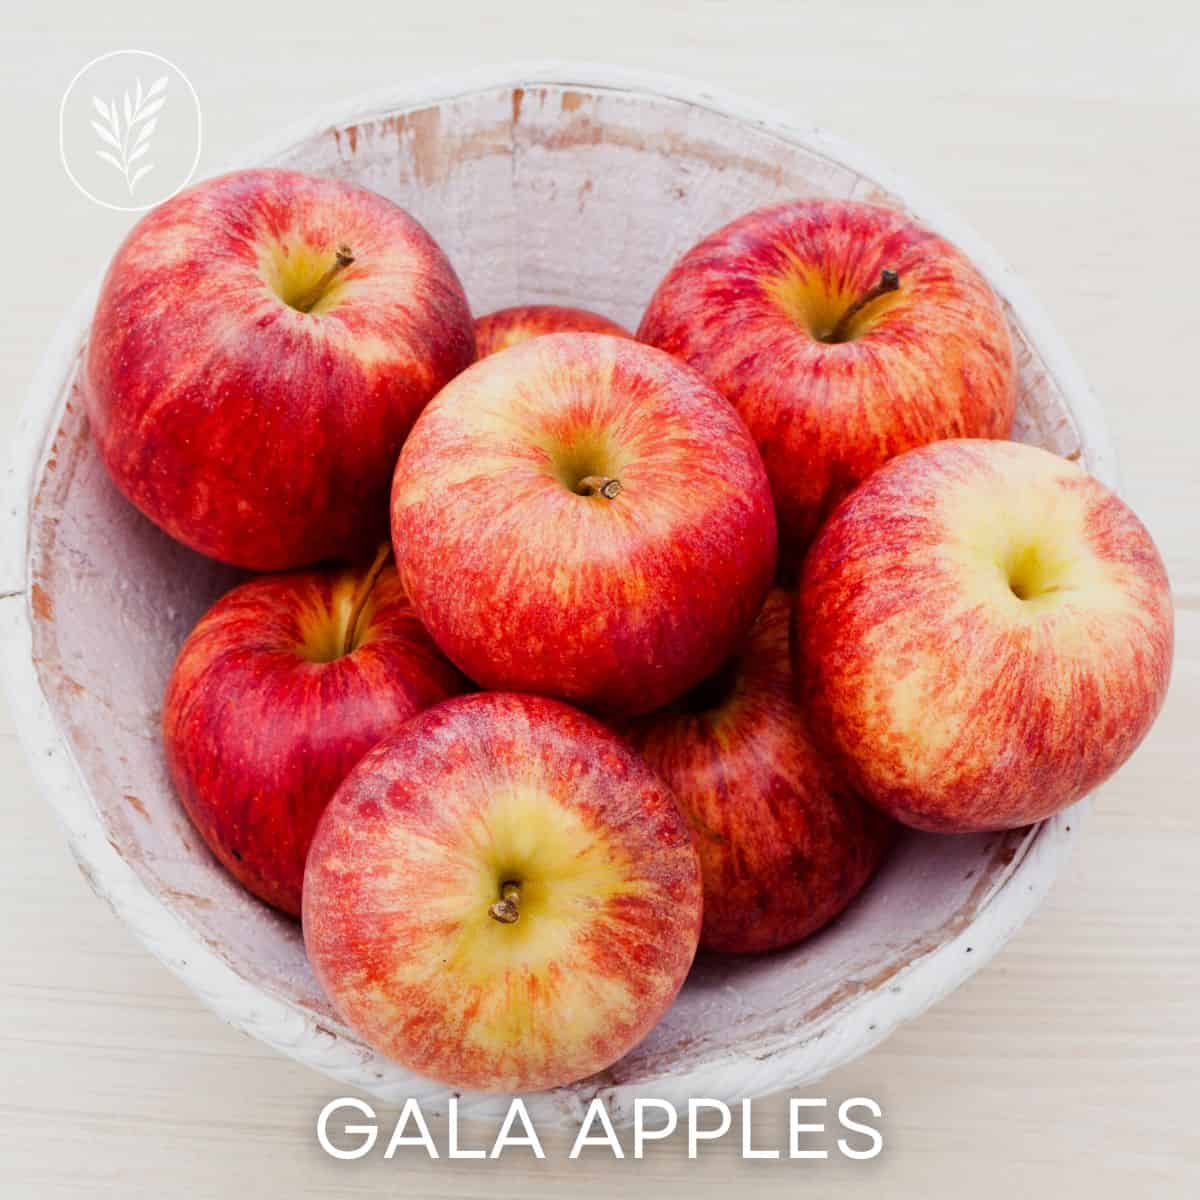 Gala apples via @home4theharvest